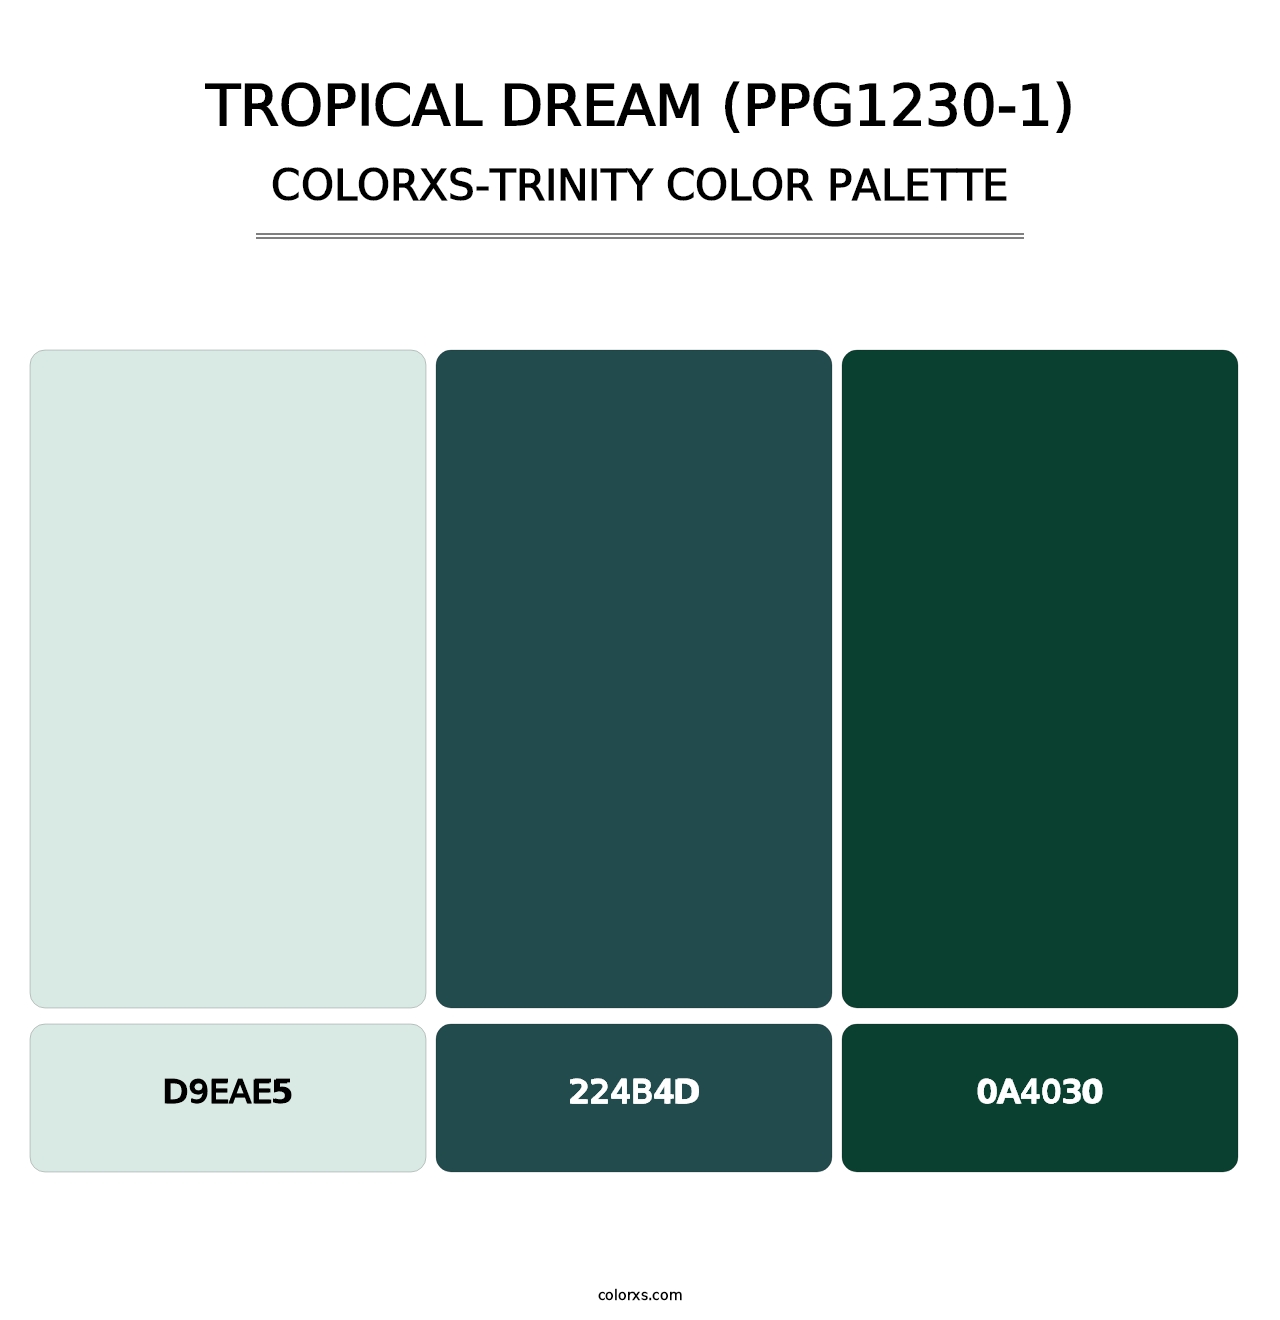 Tropical Dream (PPG1230-1) - Colorxs Trinity Palette